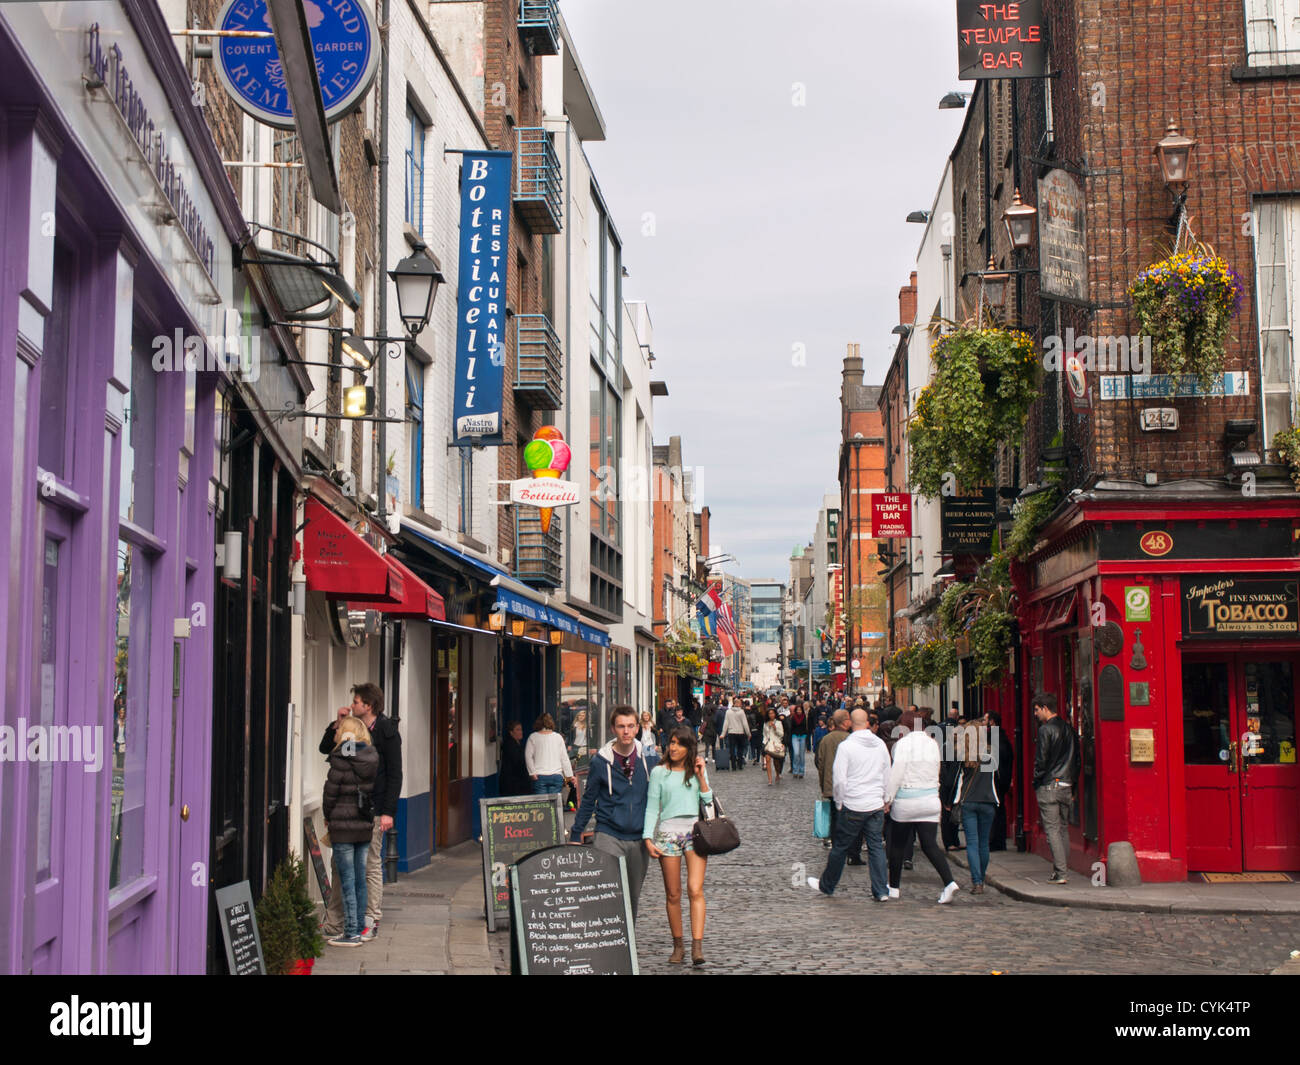 Temple bar district of Dublin Ireland street scene Stock Photo